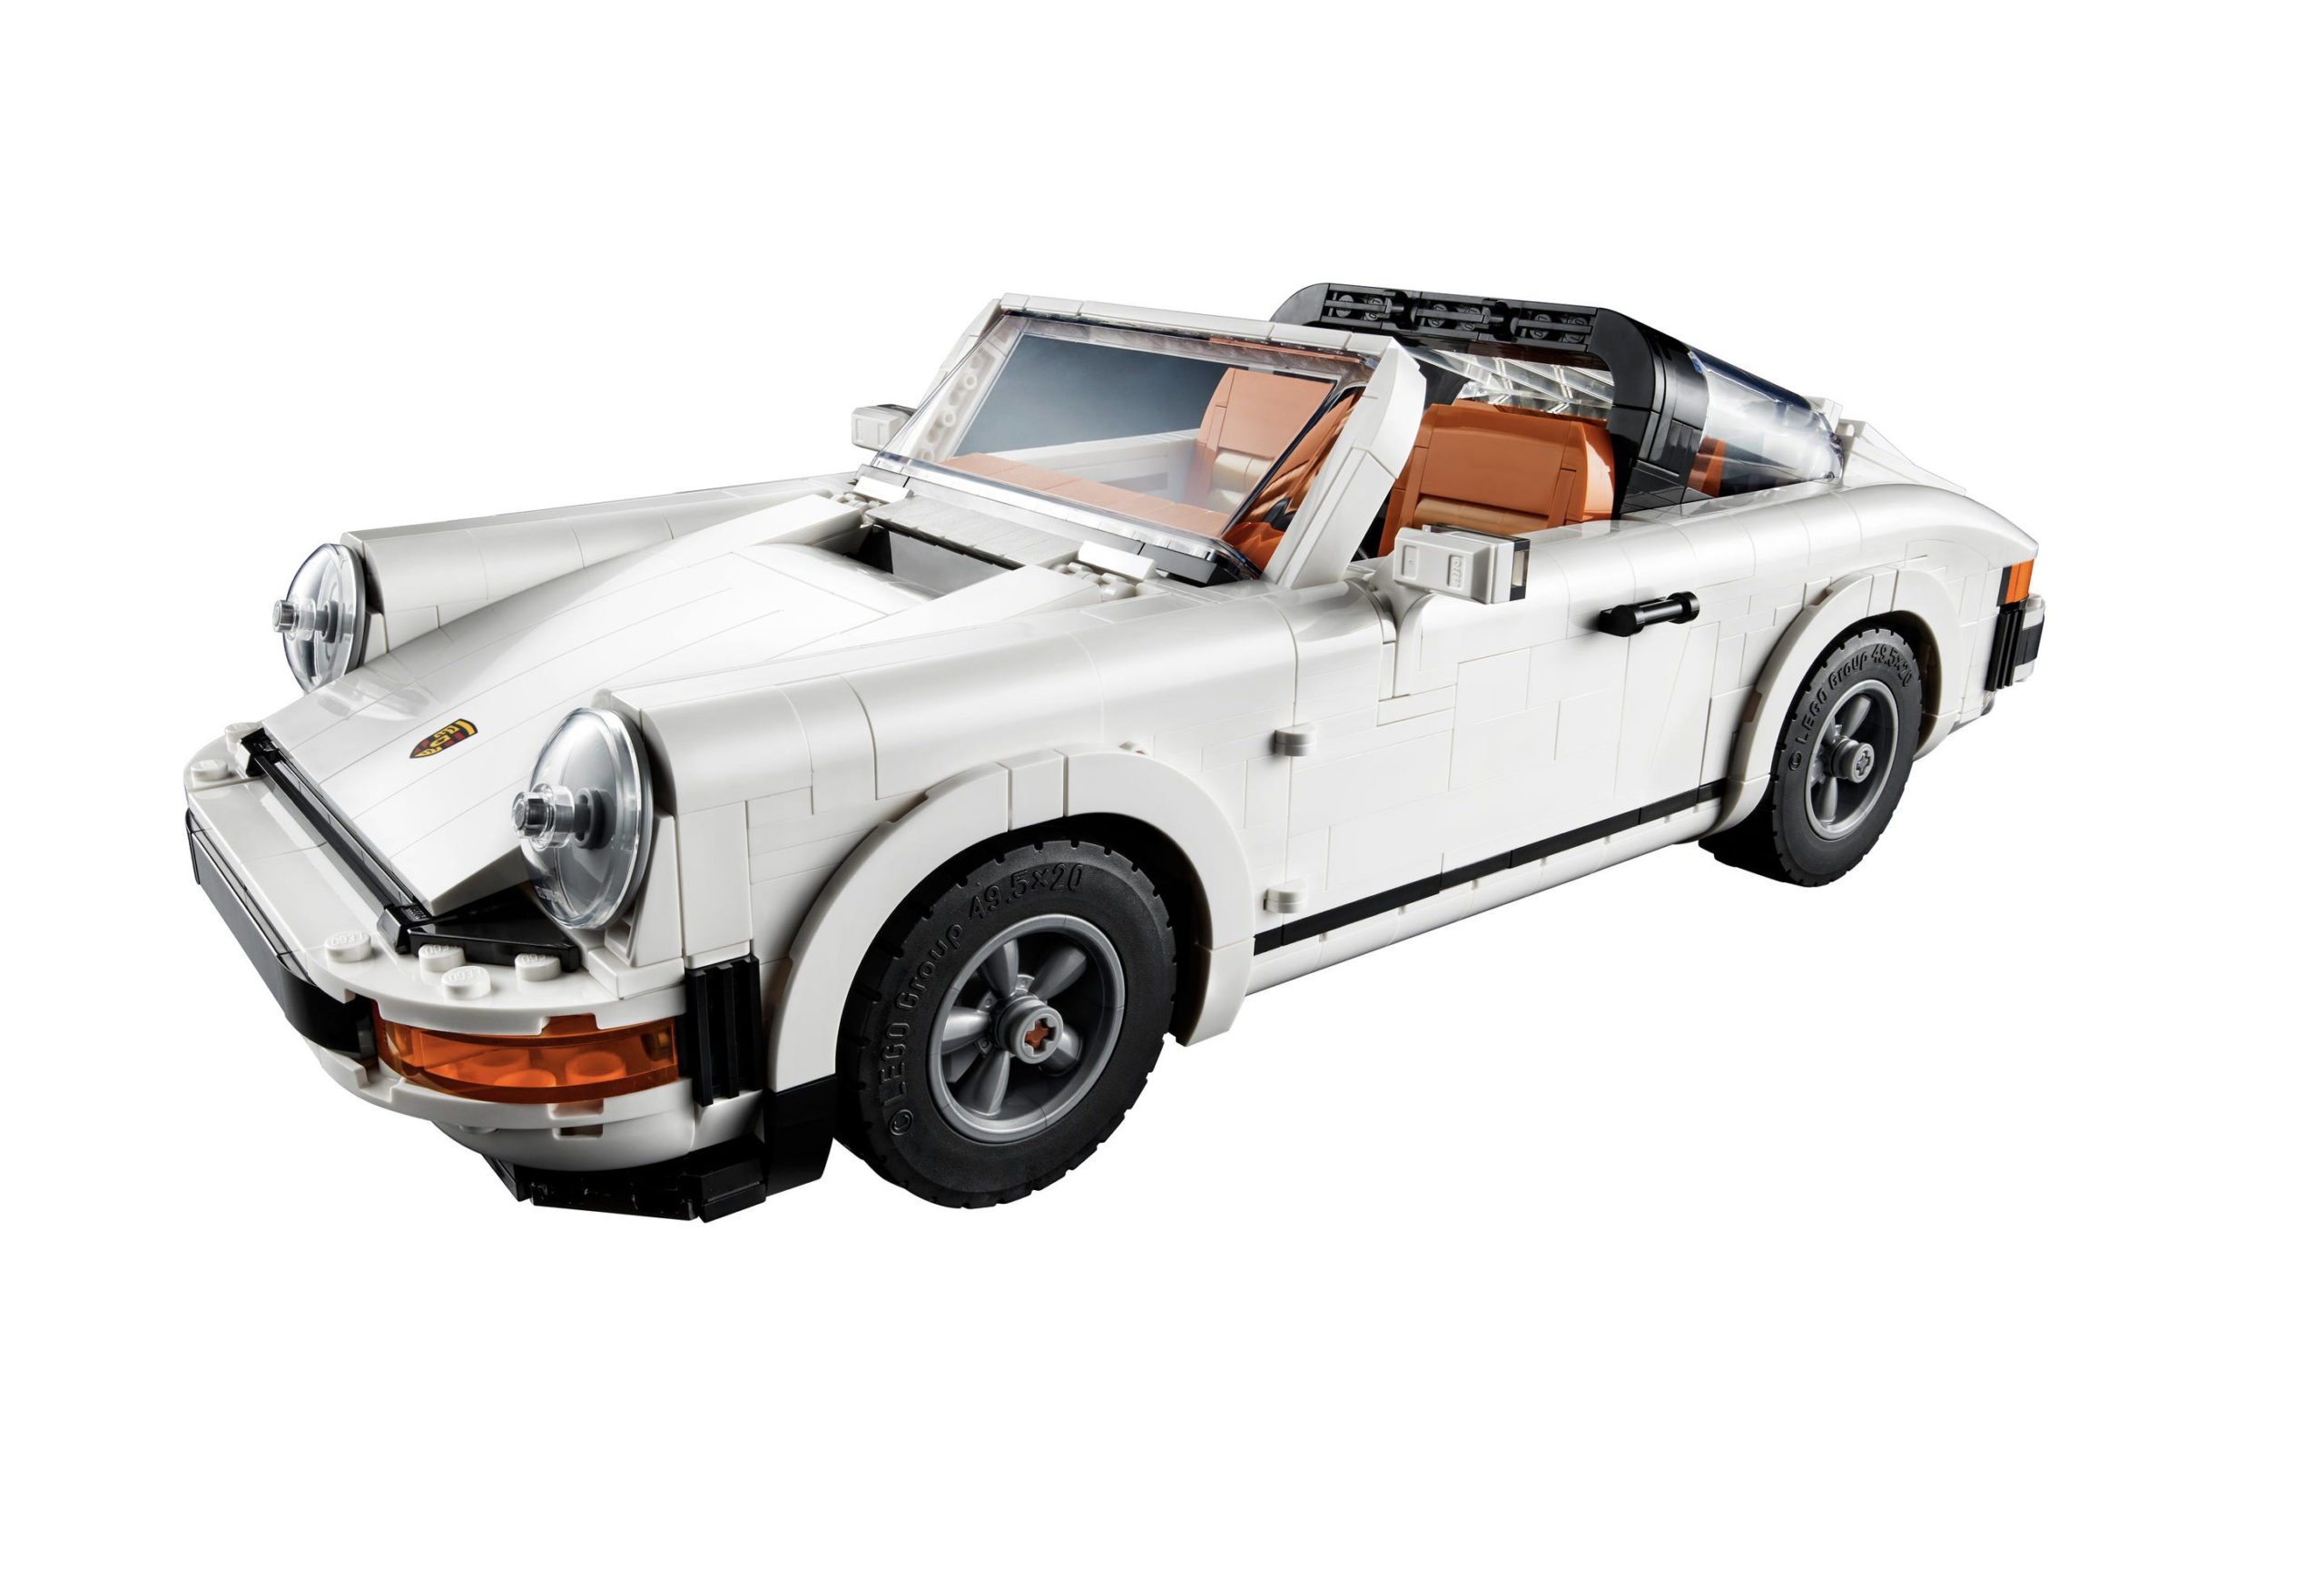 LEGO 10295 Porsche 911 Turbo & Targa detailed building review